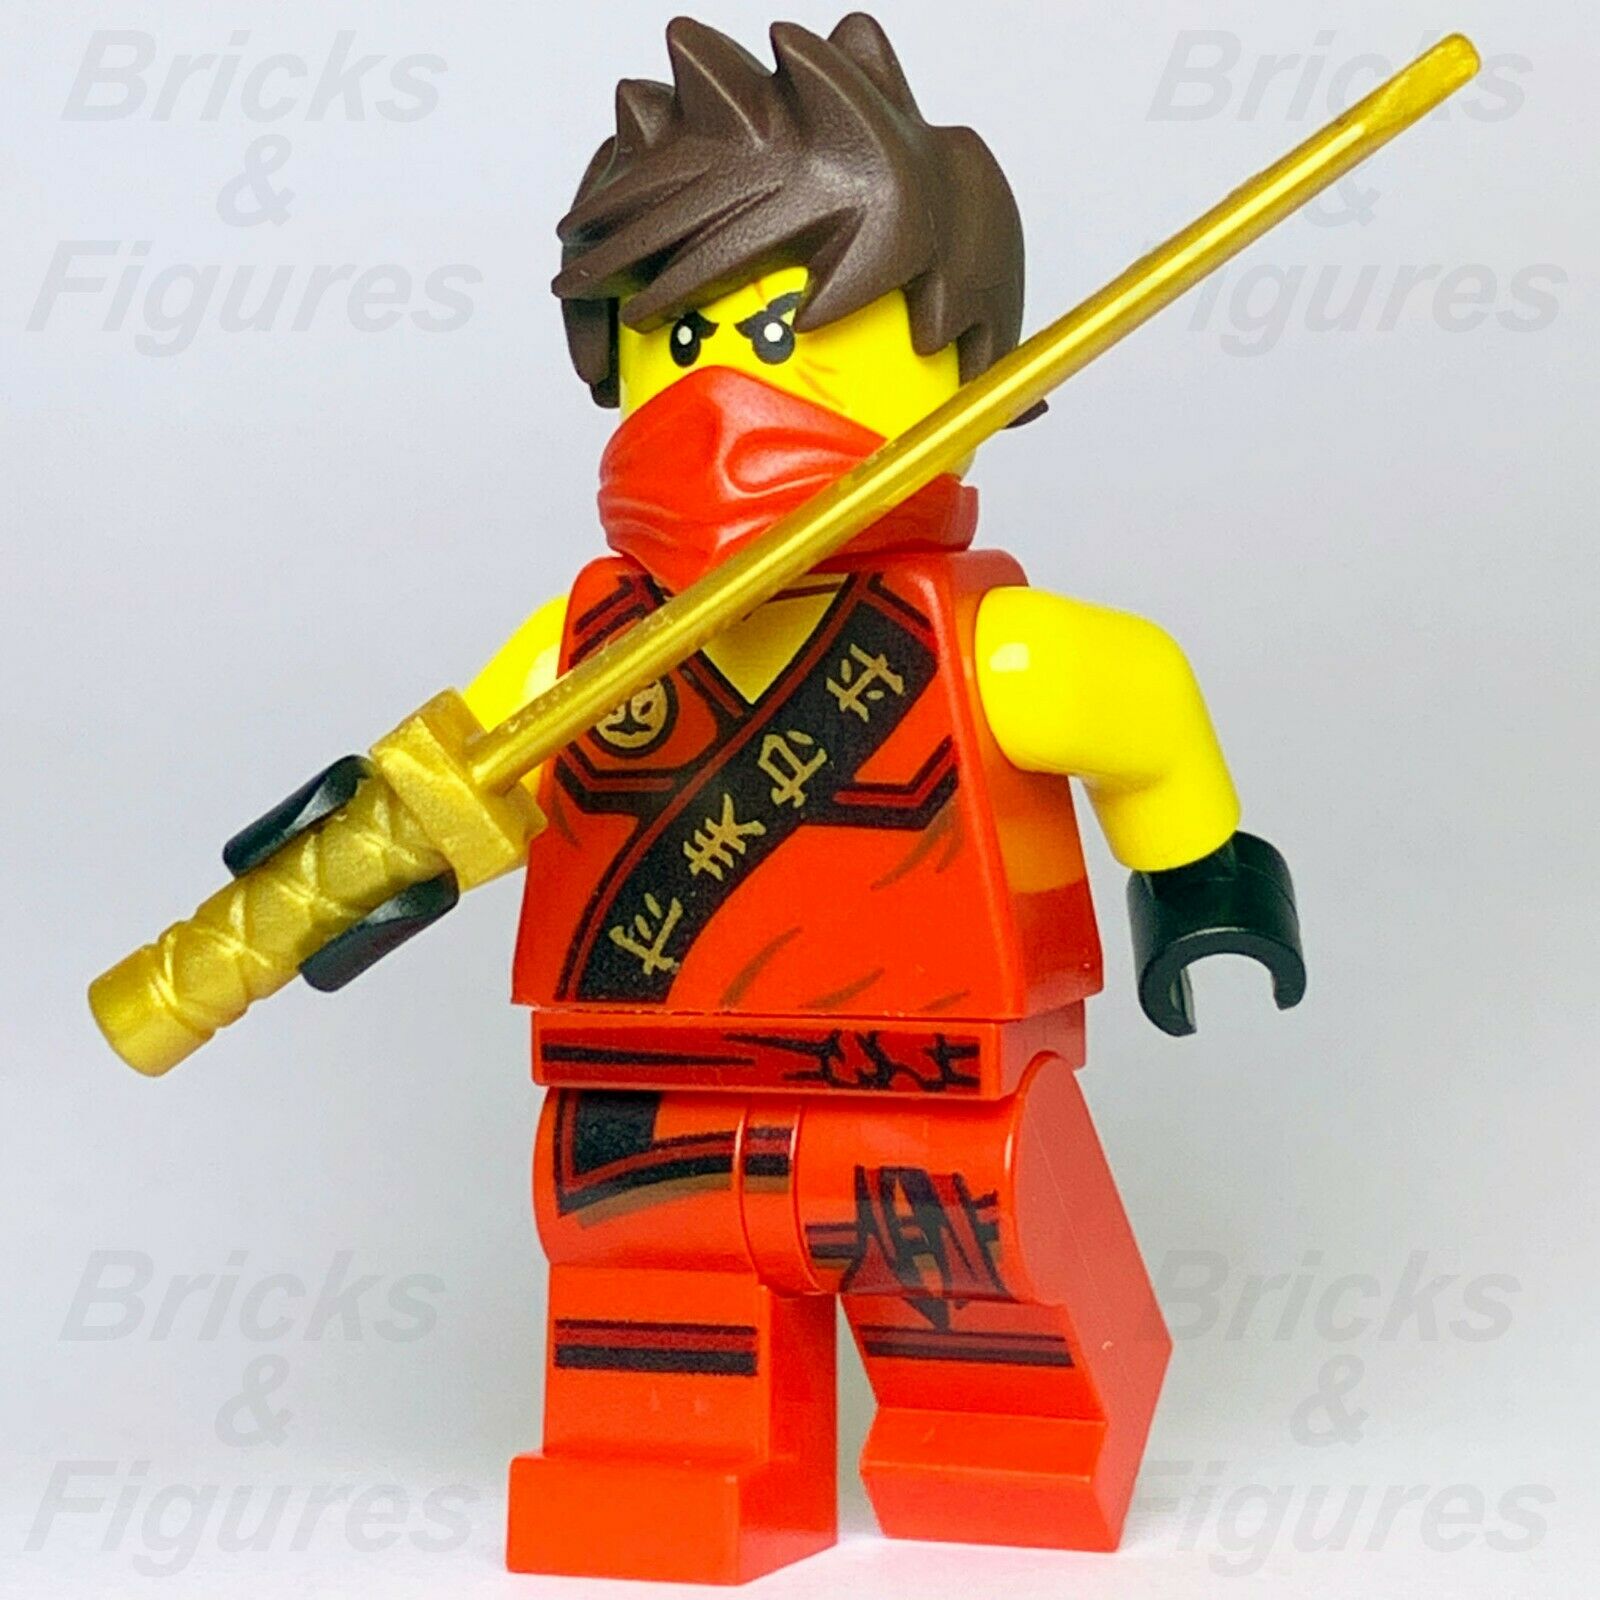 New Ninjago LEGO Red Fire Ninja Kai Minifigure from sets 70756 70752 30293 - Bricks & Figures